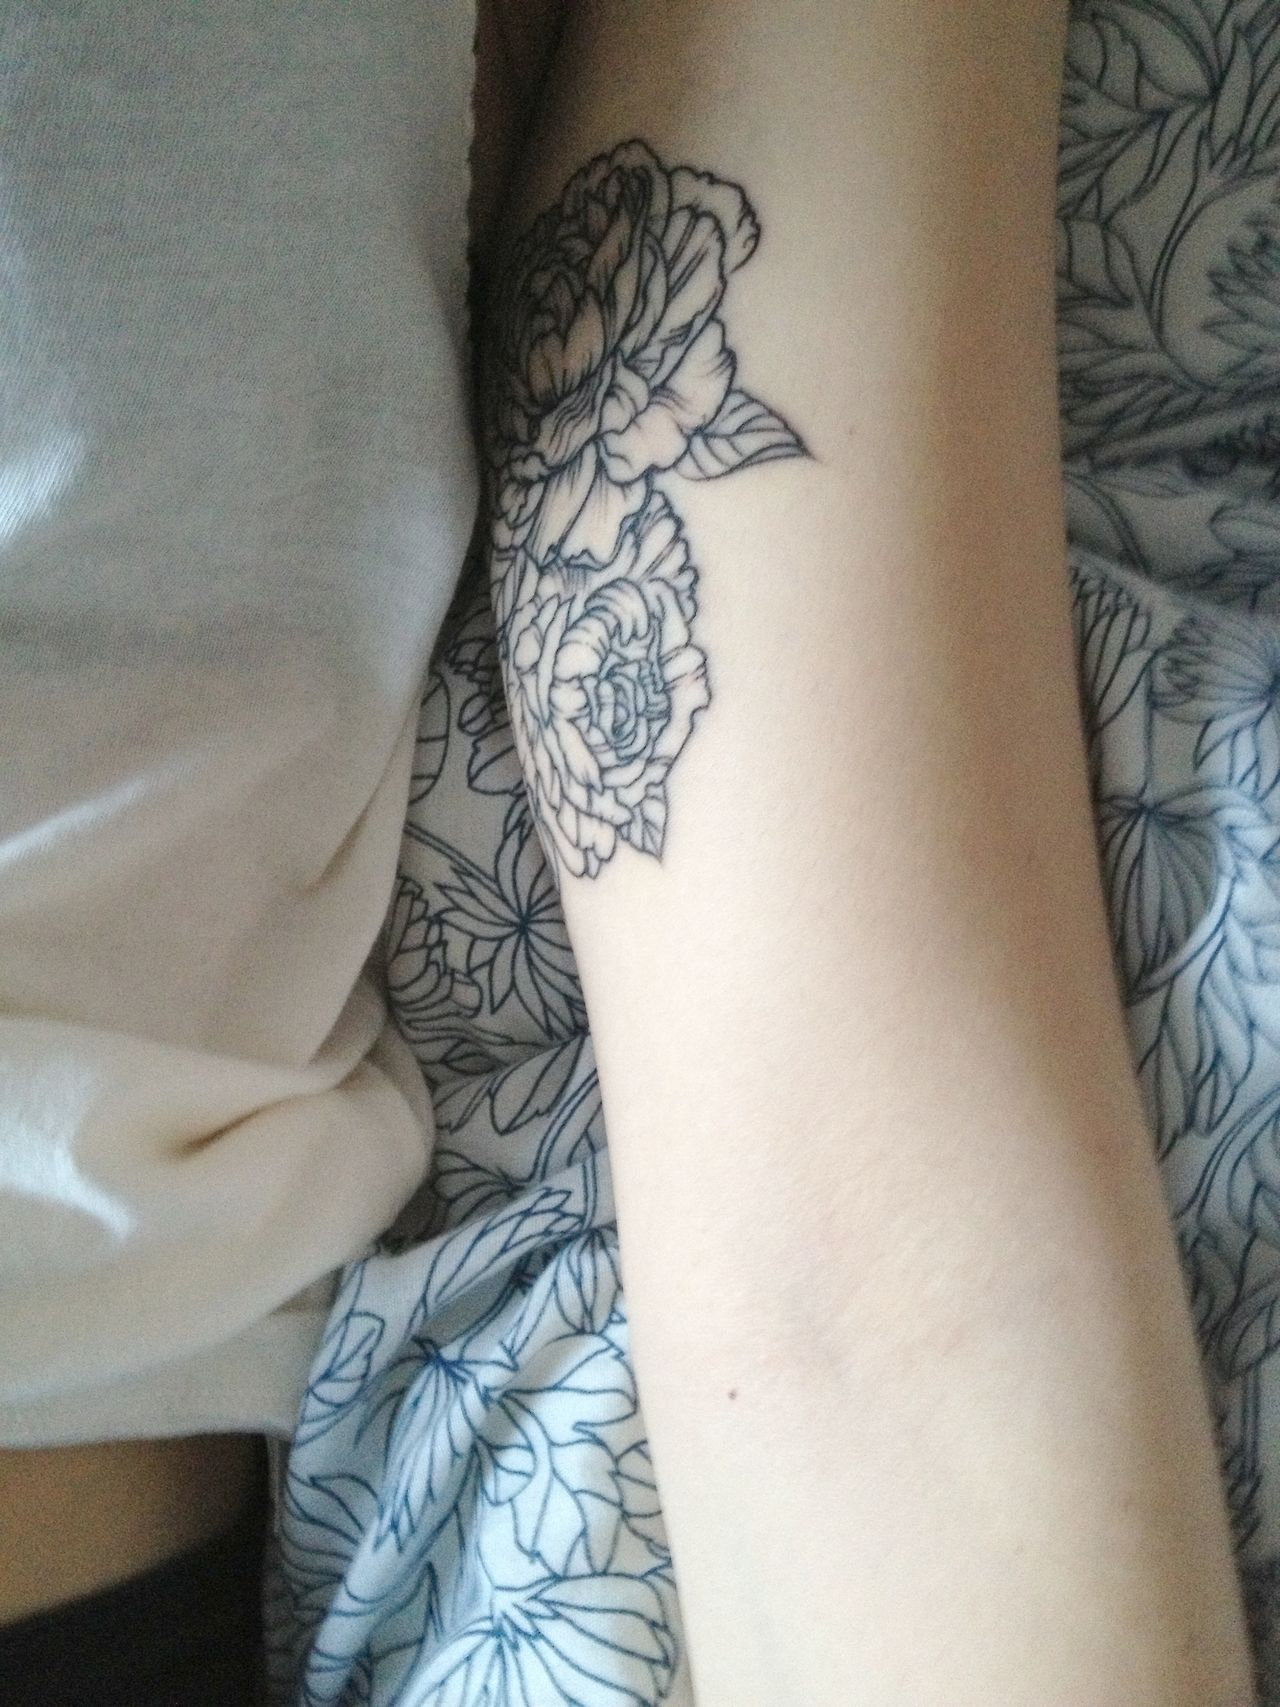 Inner Upper Arm Rose Tattoo I Like This Spot Away From Sunlight regarding dimensions 1280 X 1707